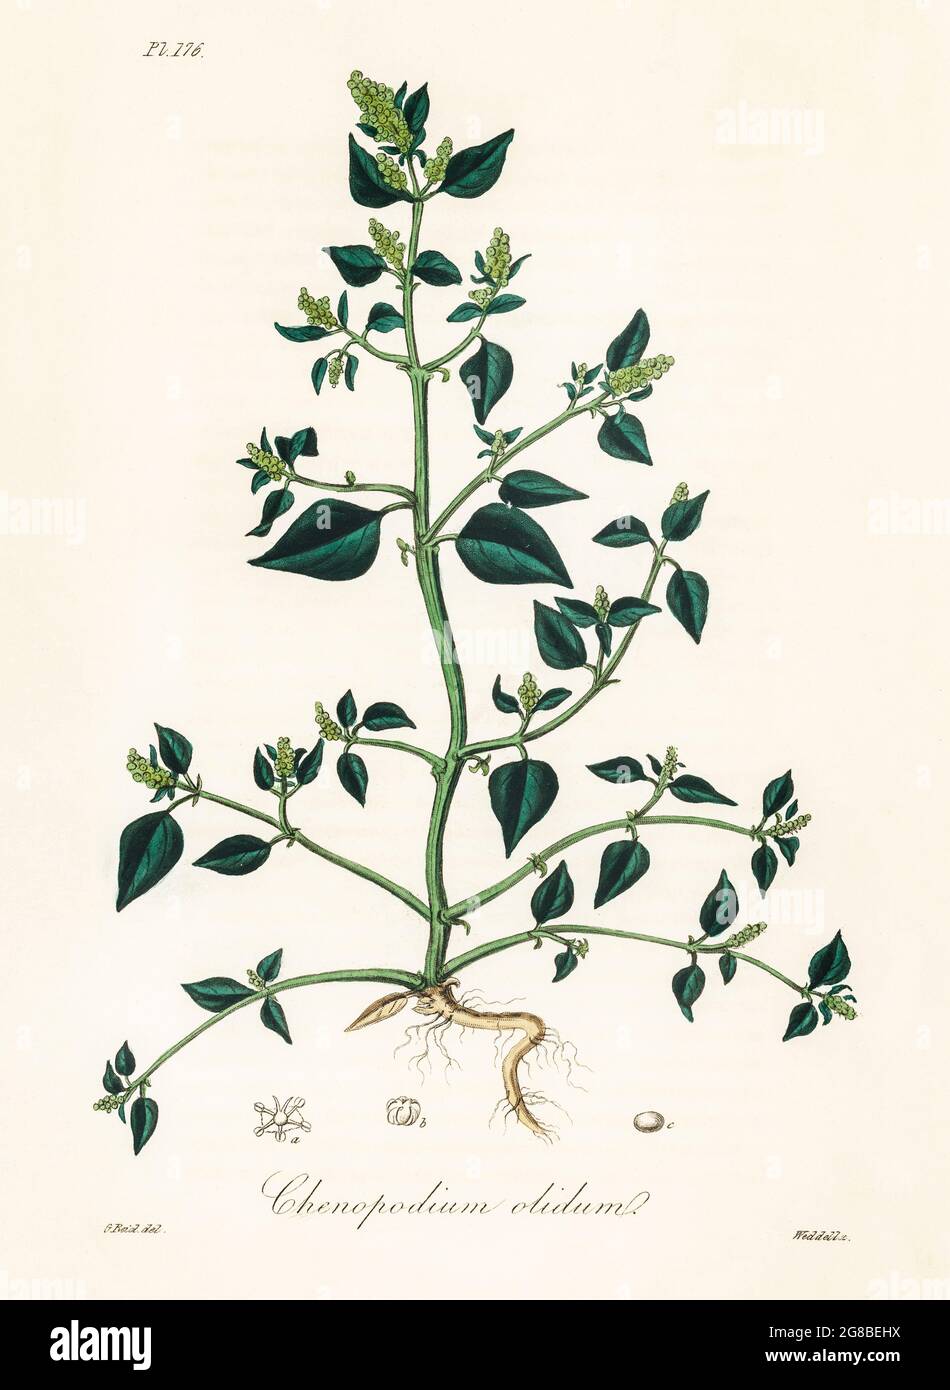 Chenopodium olidum illustration from Medical Botany (1836) by John Stephenson and James Morss Churchill. Stock Photo